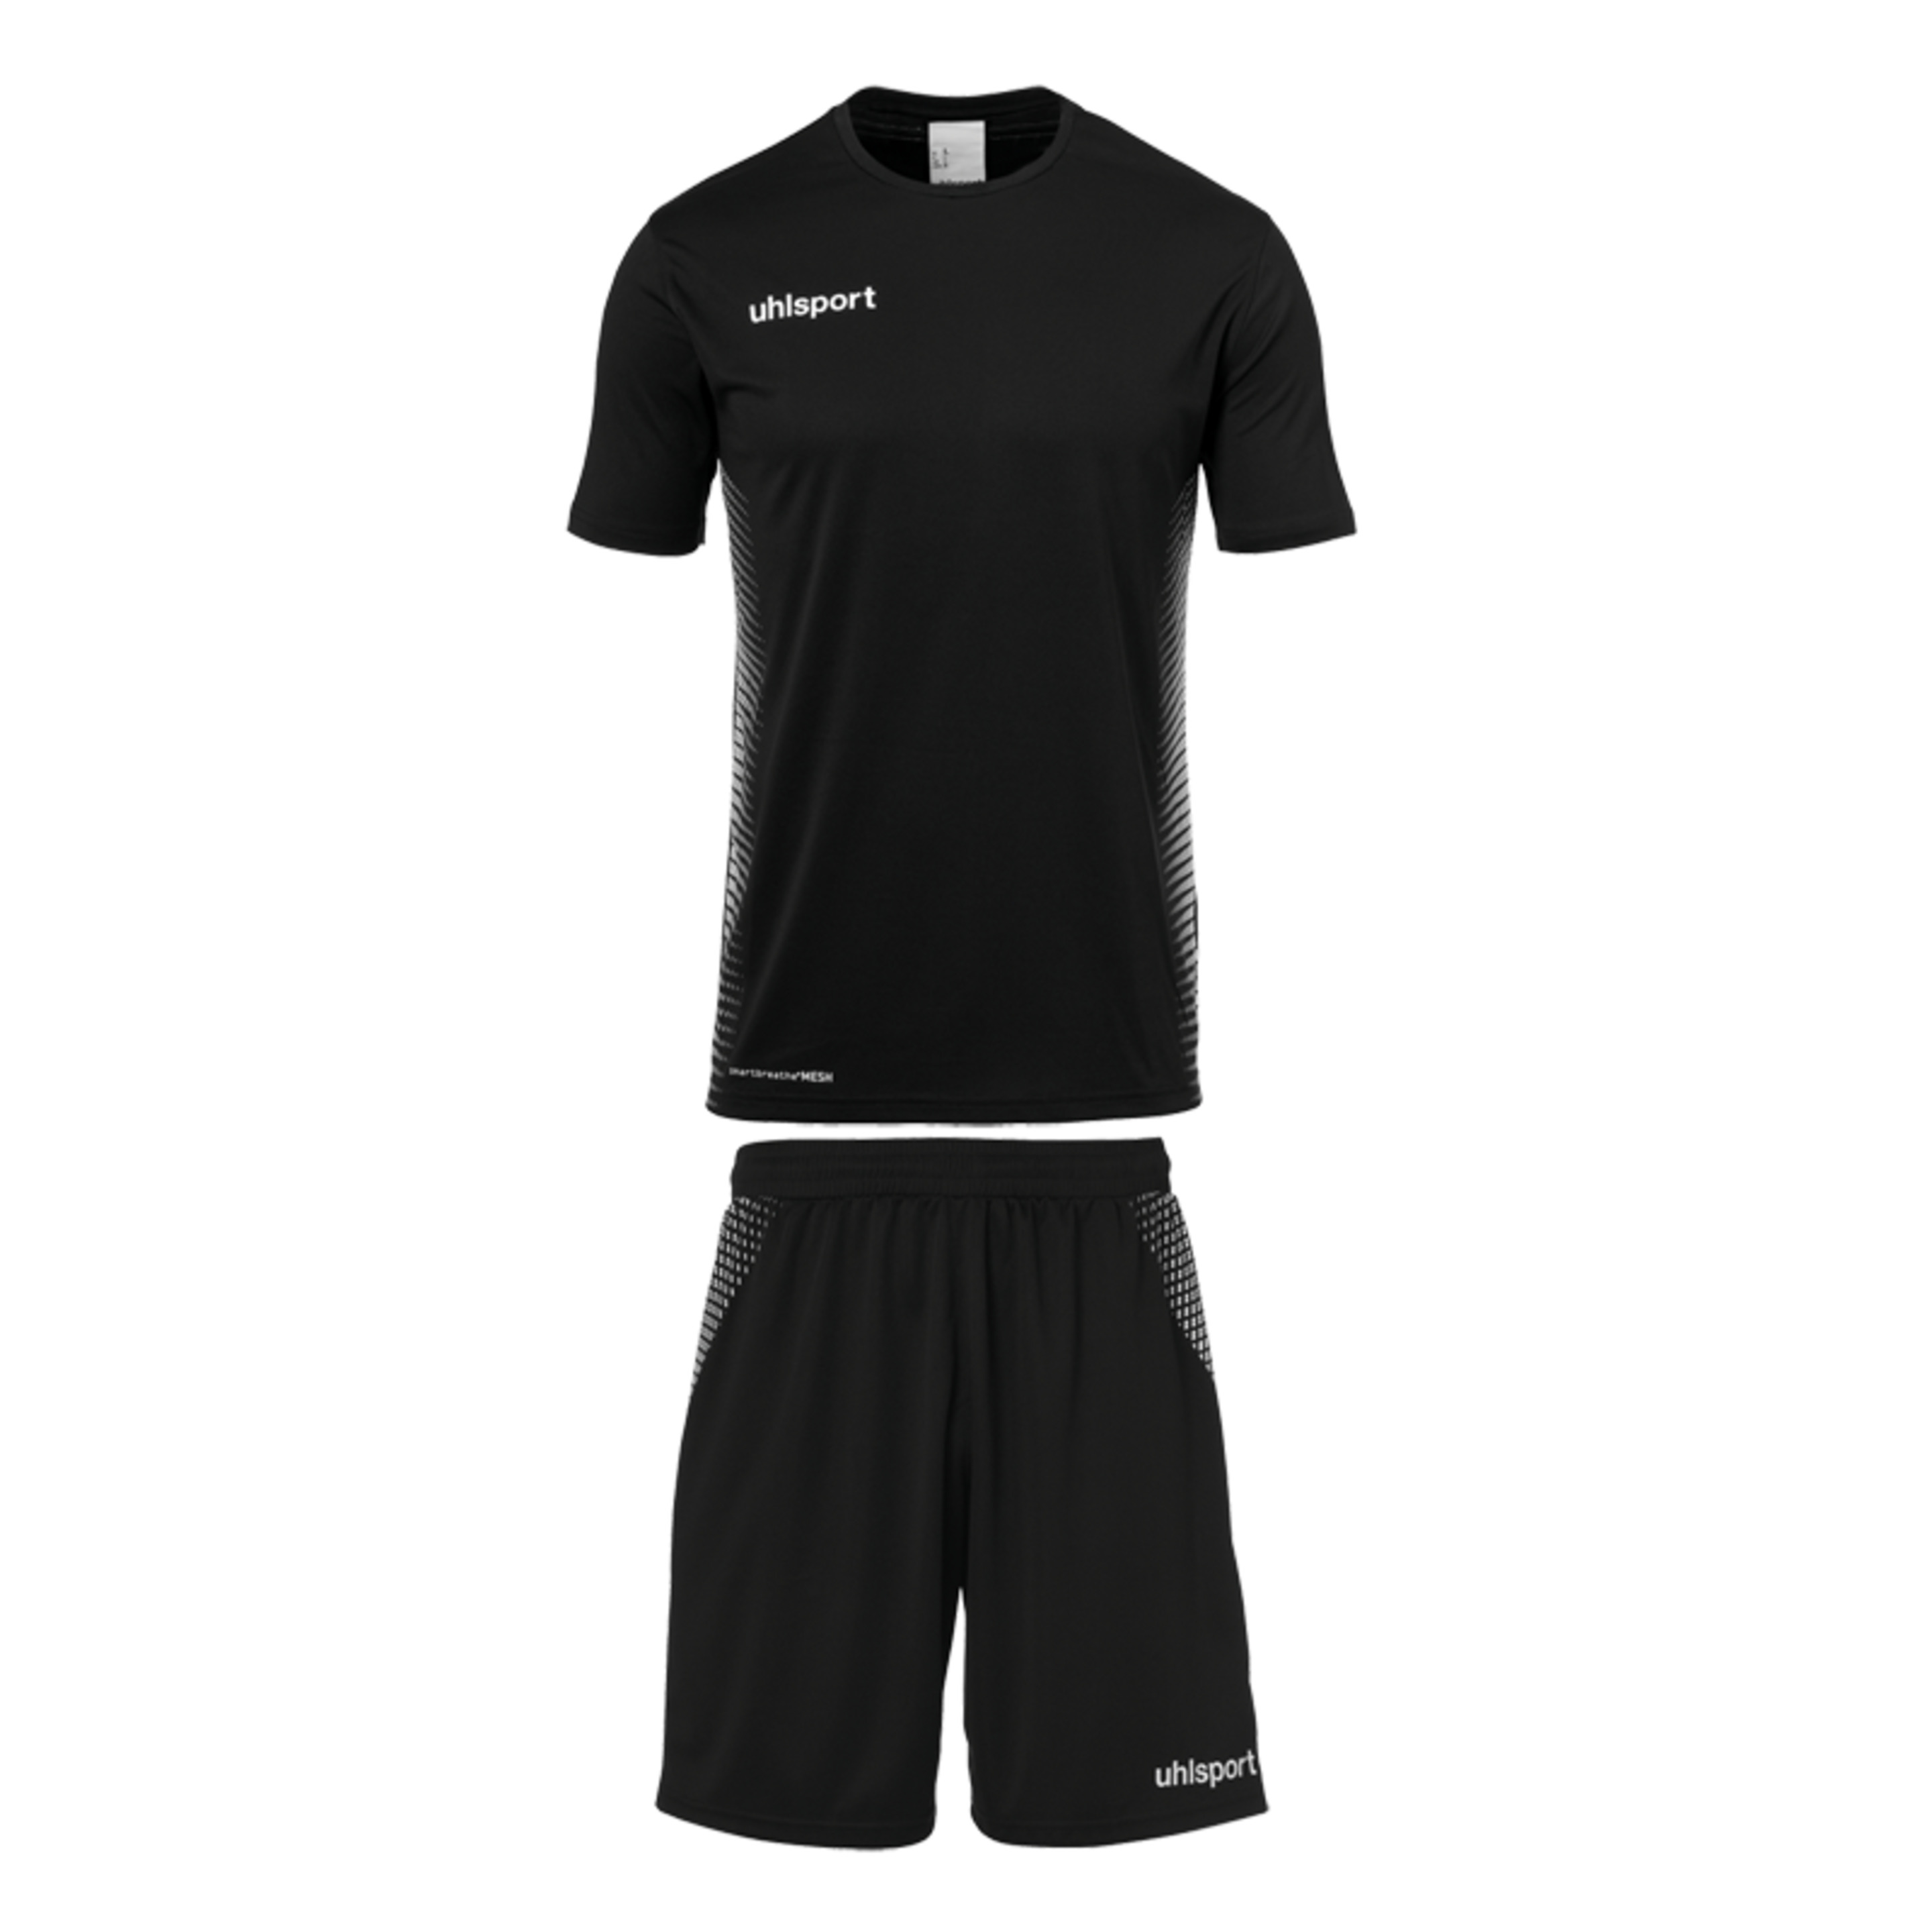 Camiseta Y Pantalón Uhlsport Score Kit Ss - Negro/Blanco - Score Kit Ss Negro/blanco Uhlsport  MKP